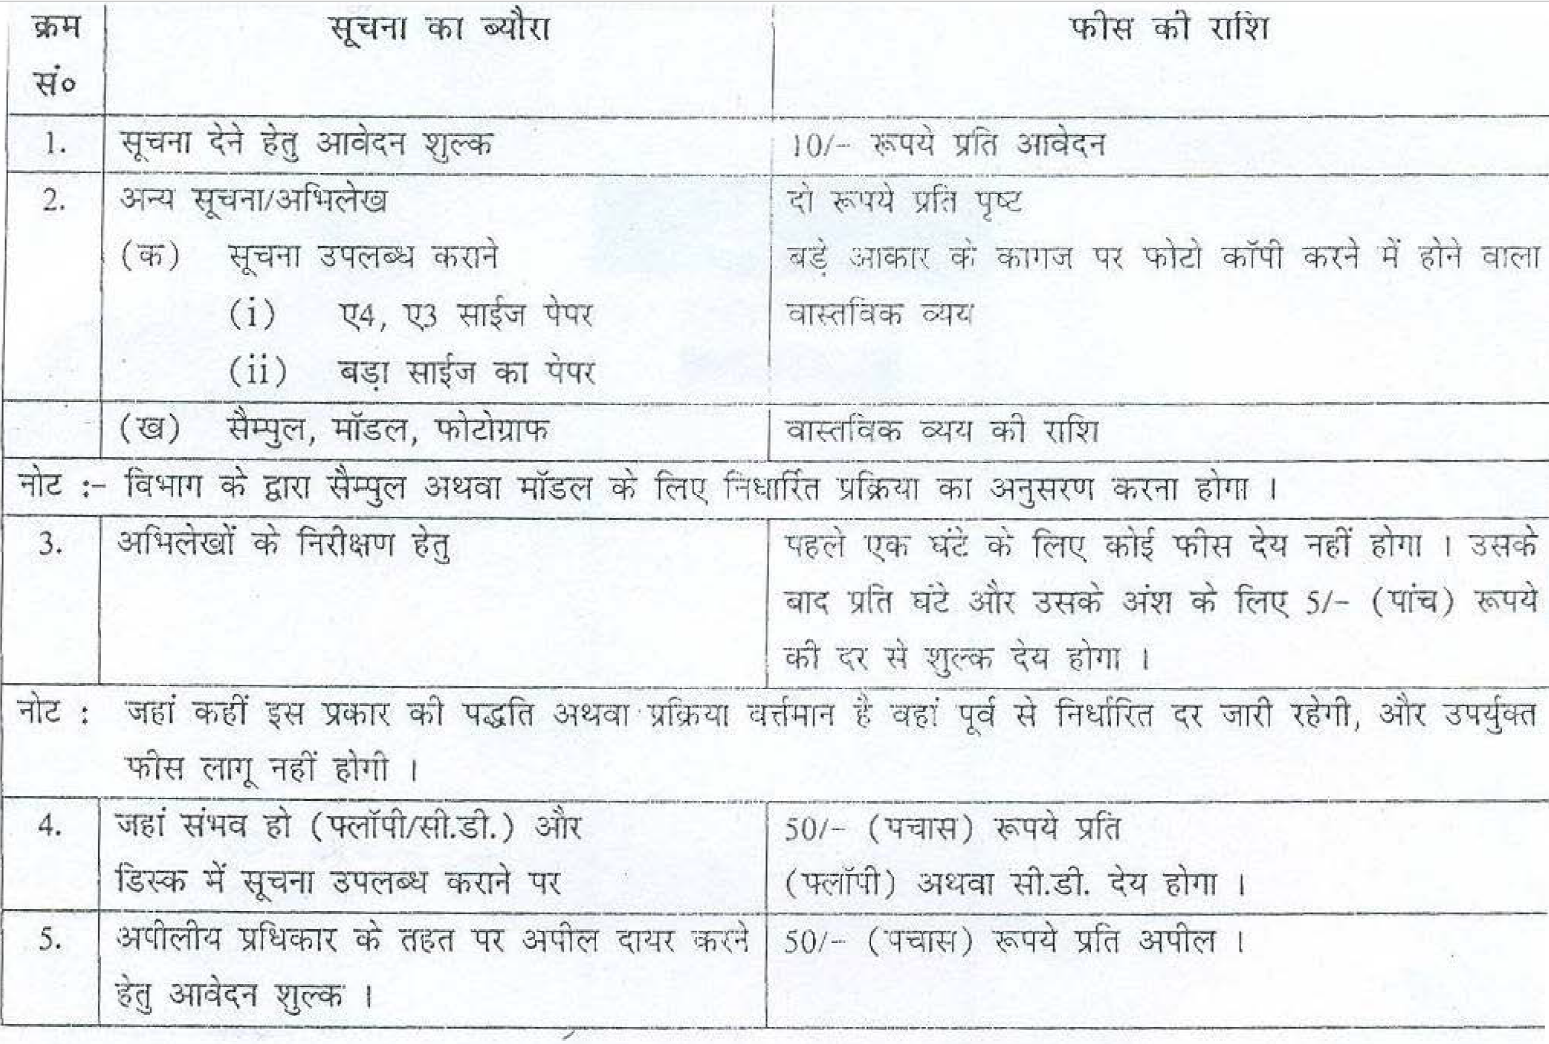 Application Fees for RTI in Bihar Legislative Assembly